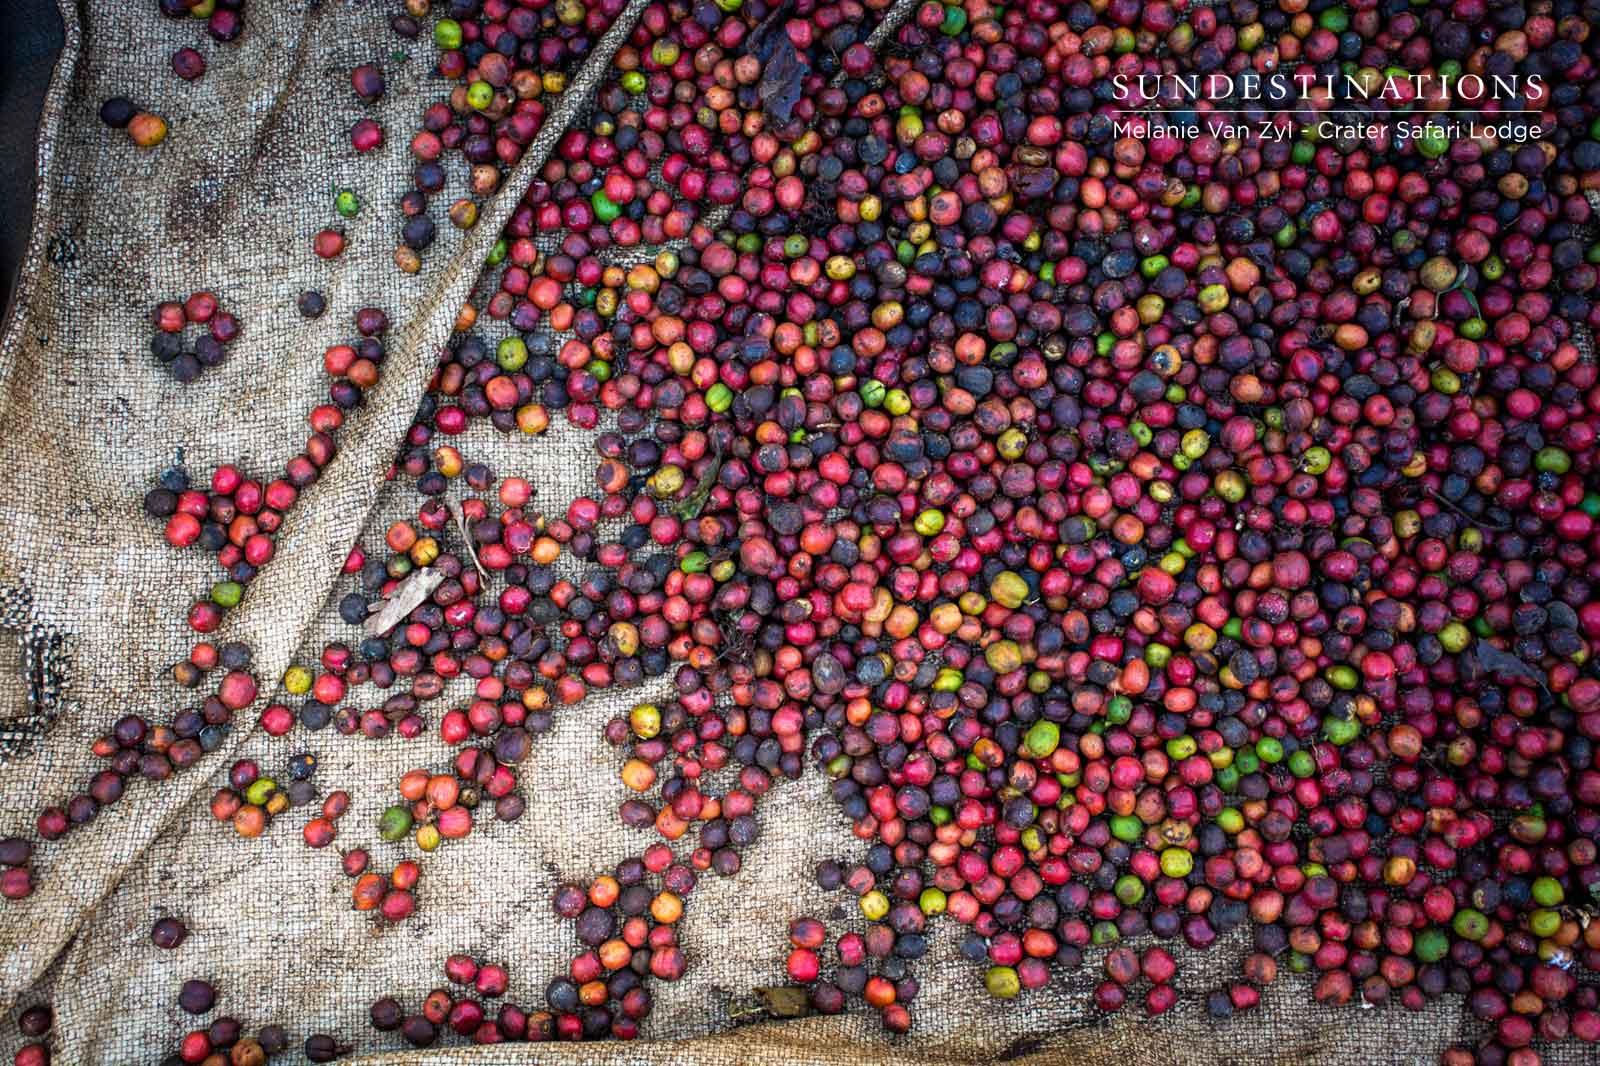 Dried Coffee Beans in Uganda